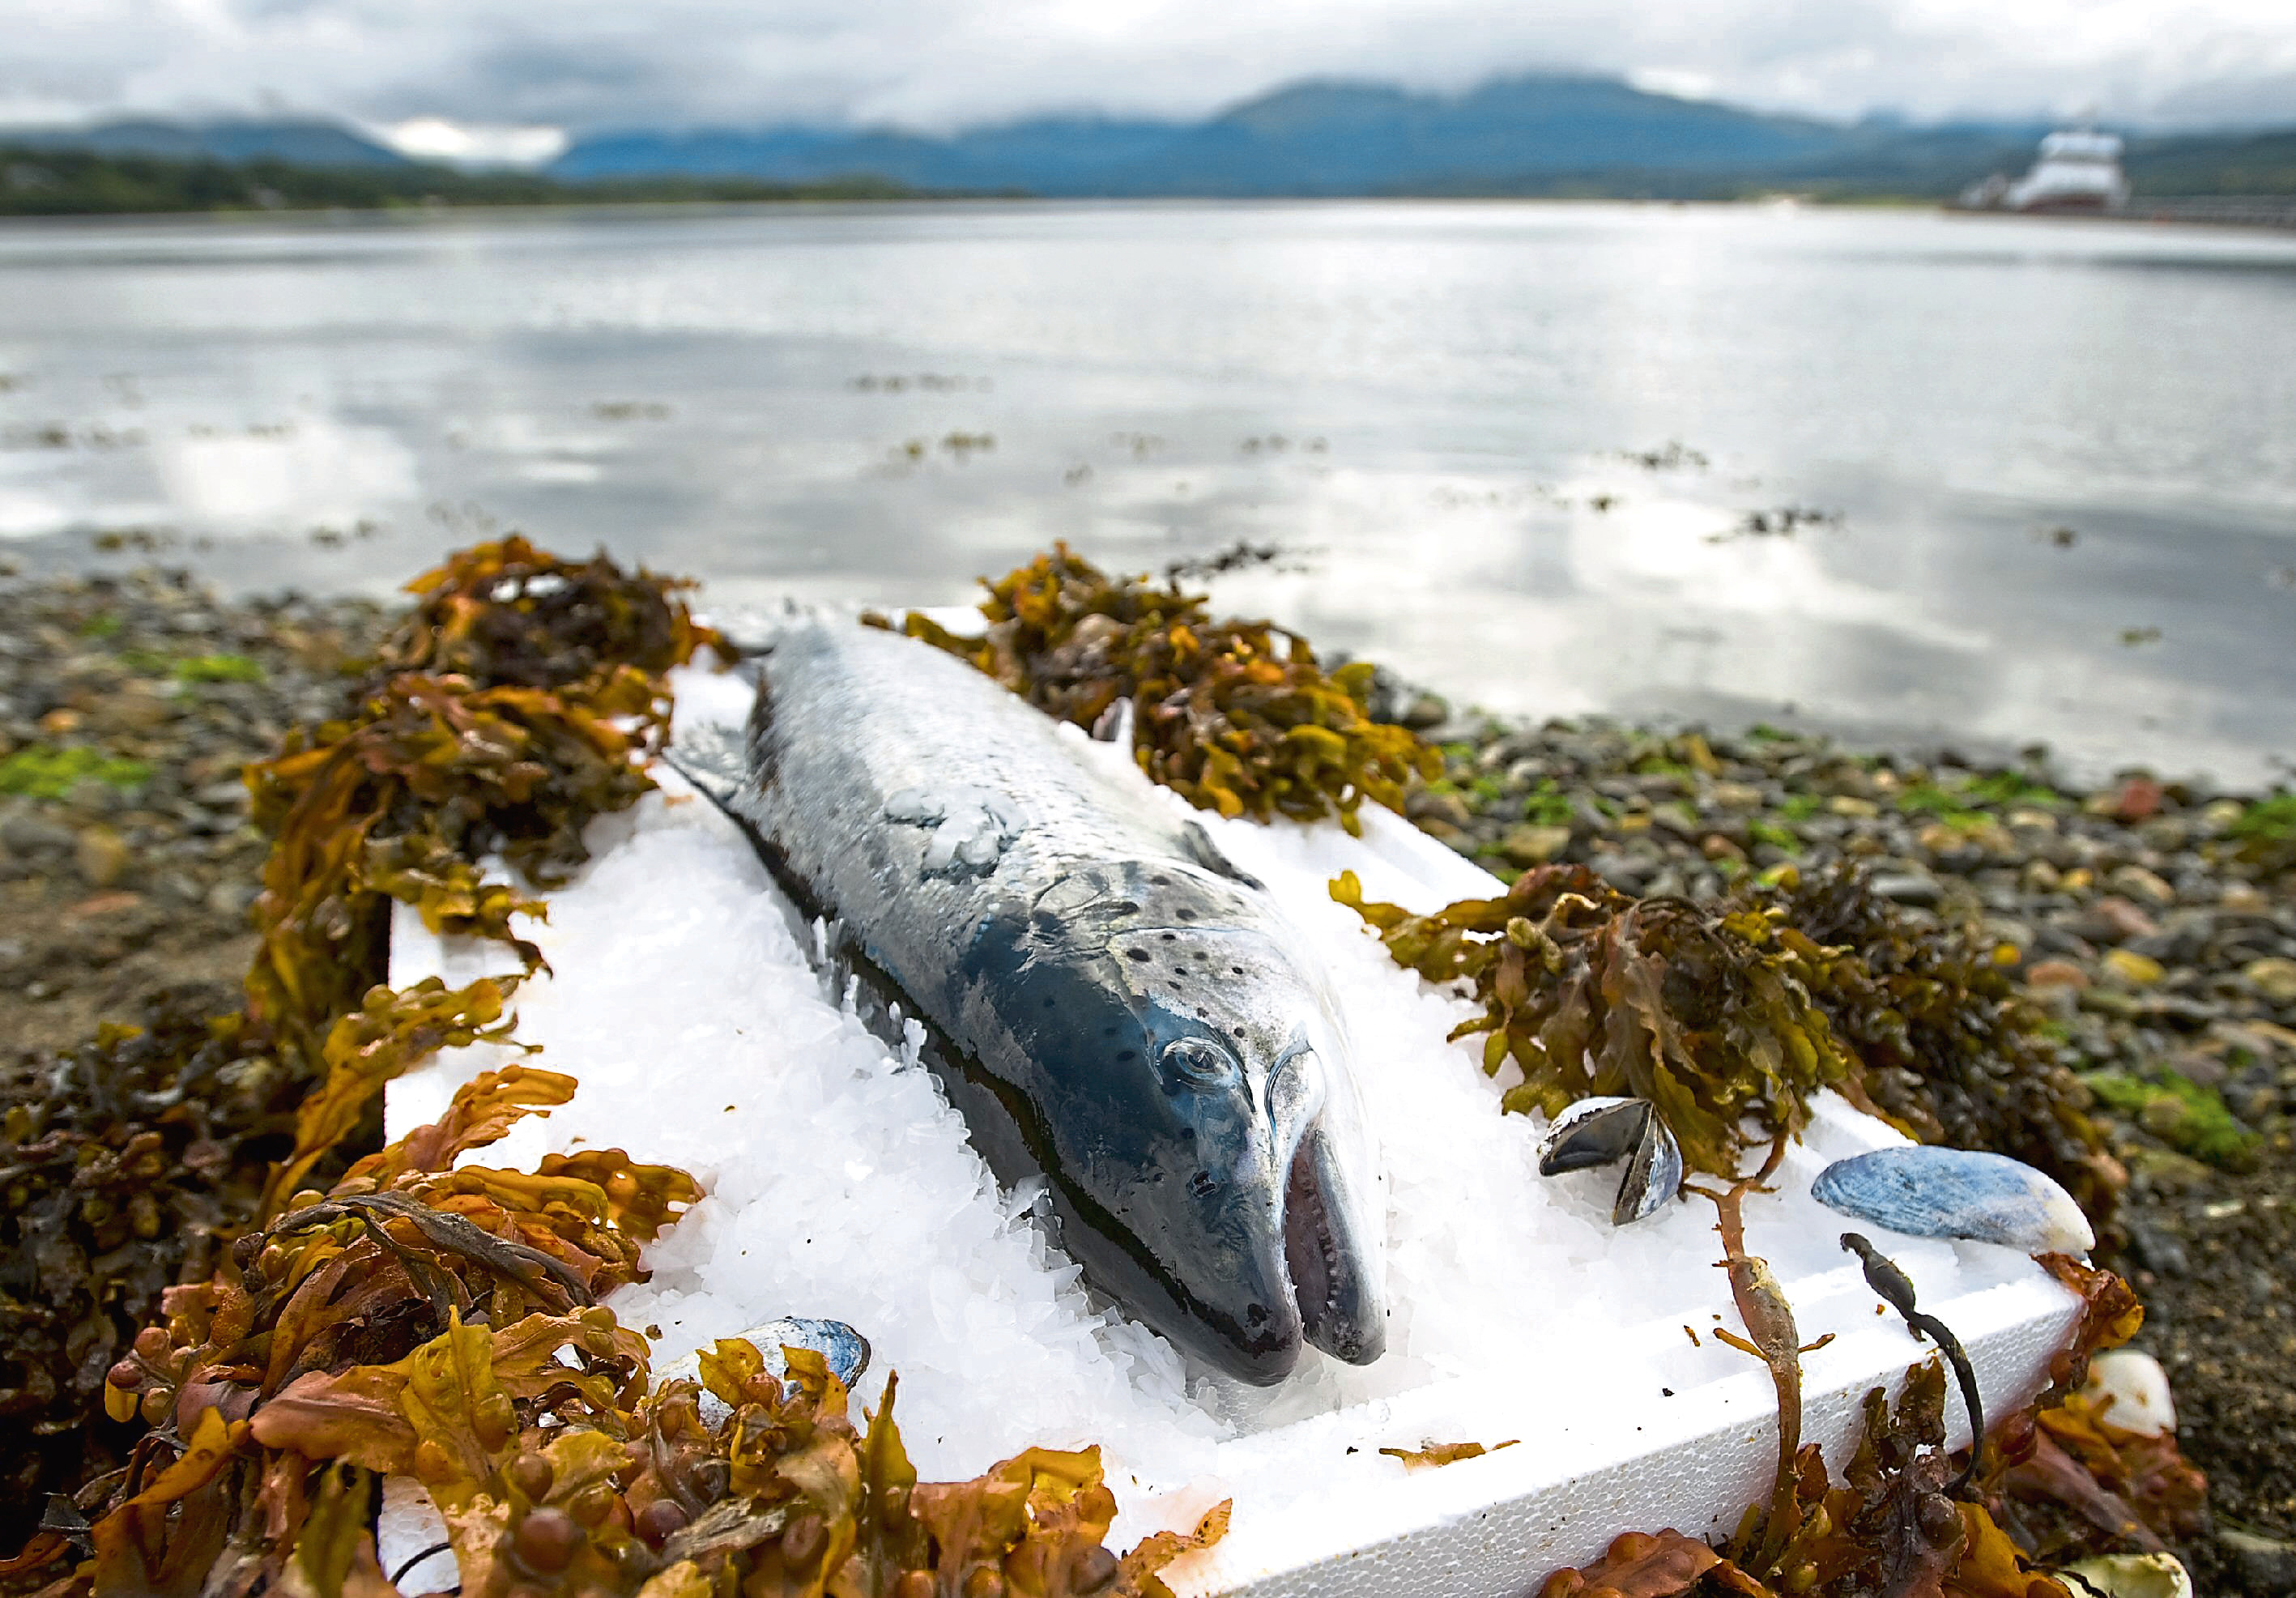 Scottish salmon submitted image: Salmon on ice.